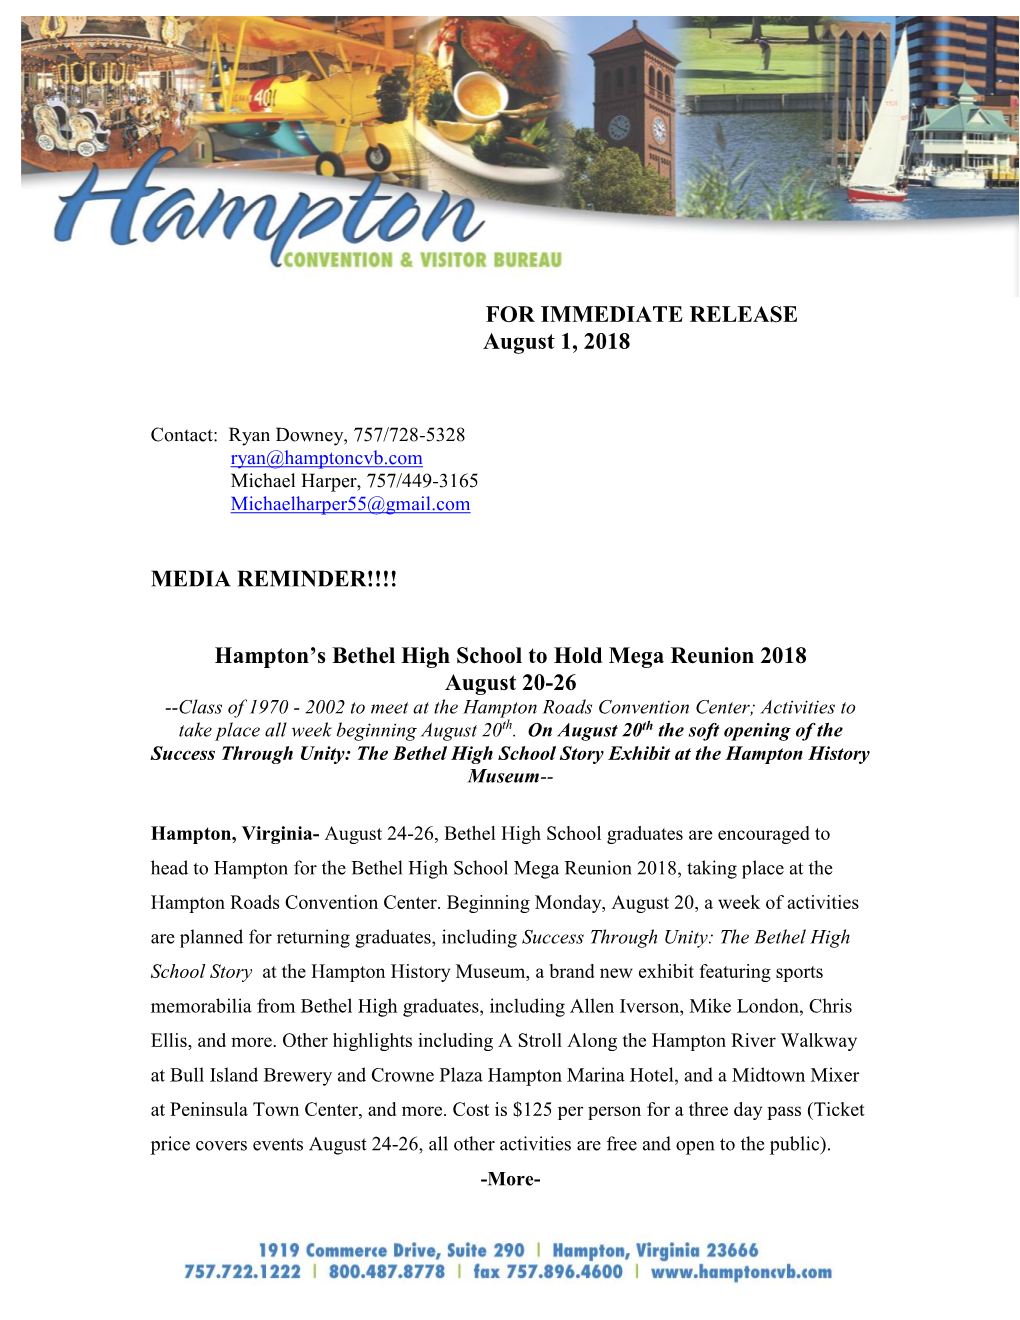 Hampton's Bethel High School to Hold Mega Reunion